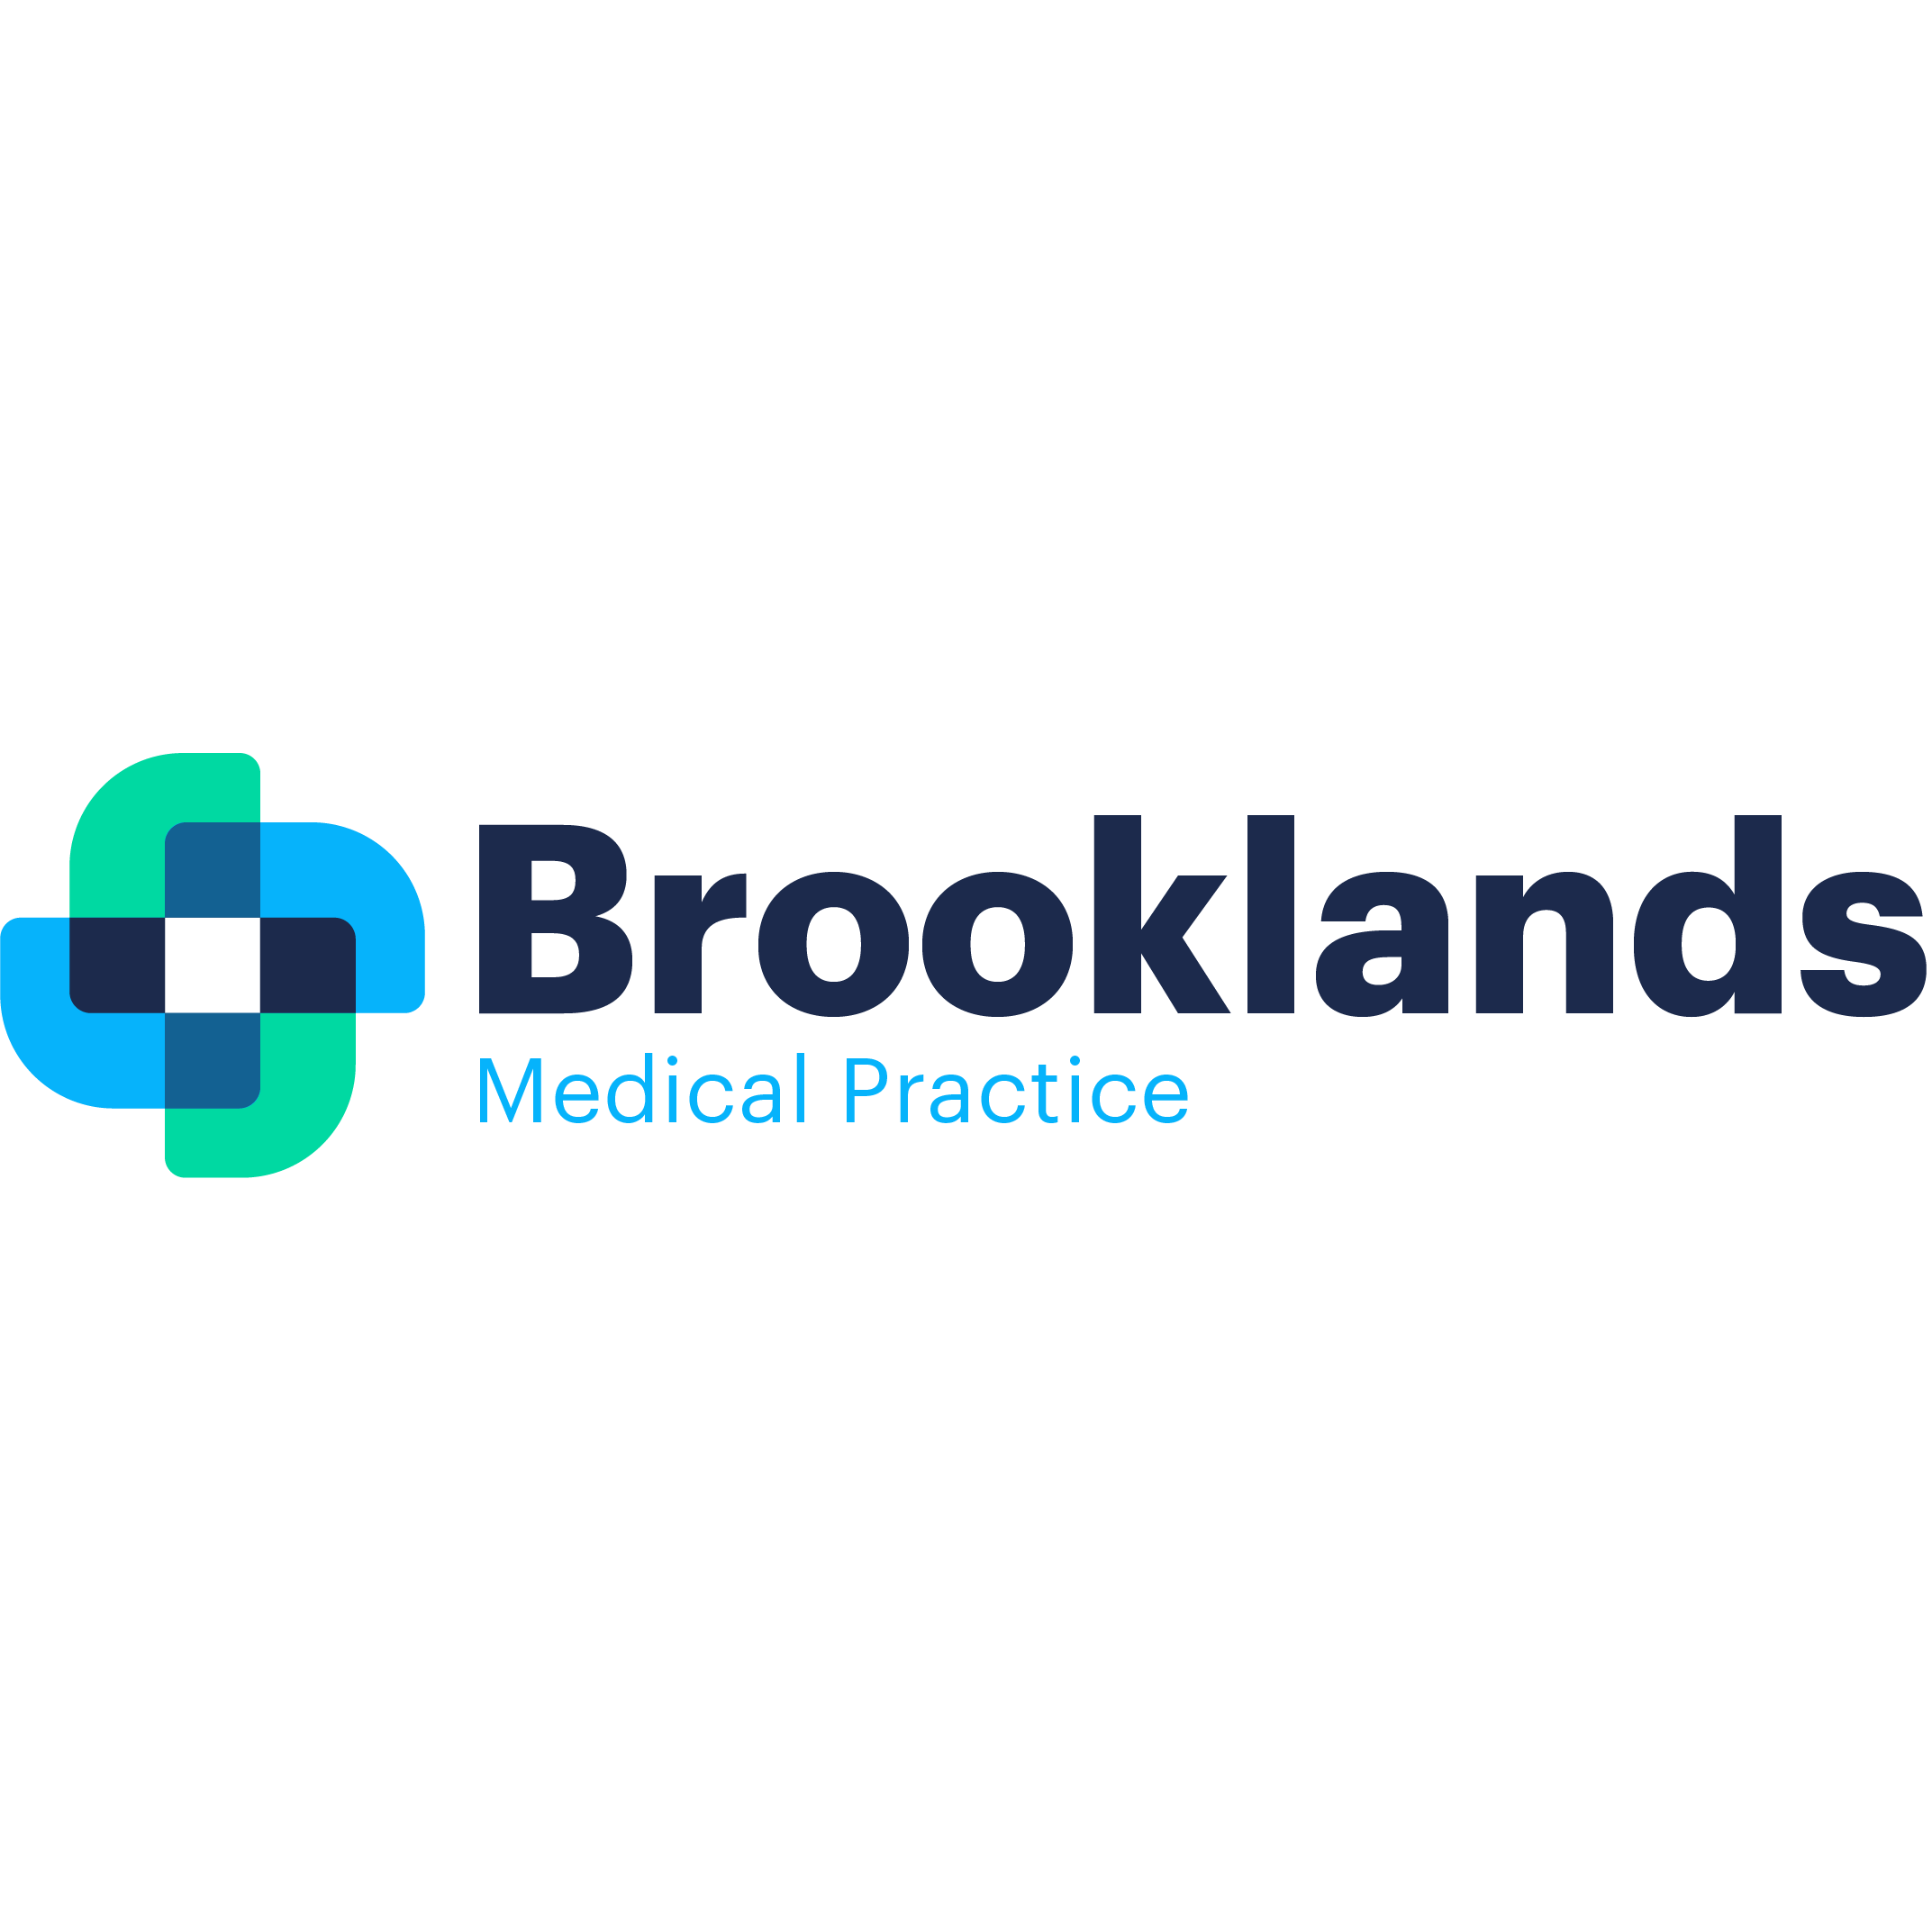 Brooklands Medical Practice